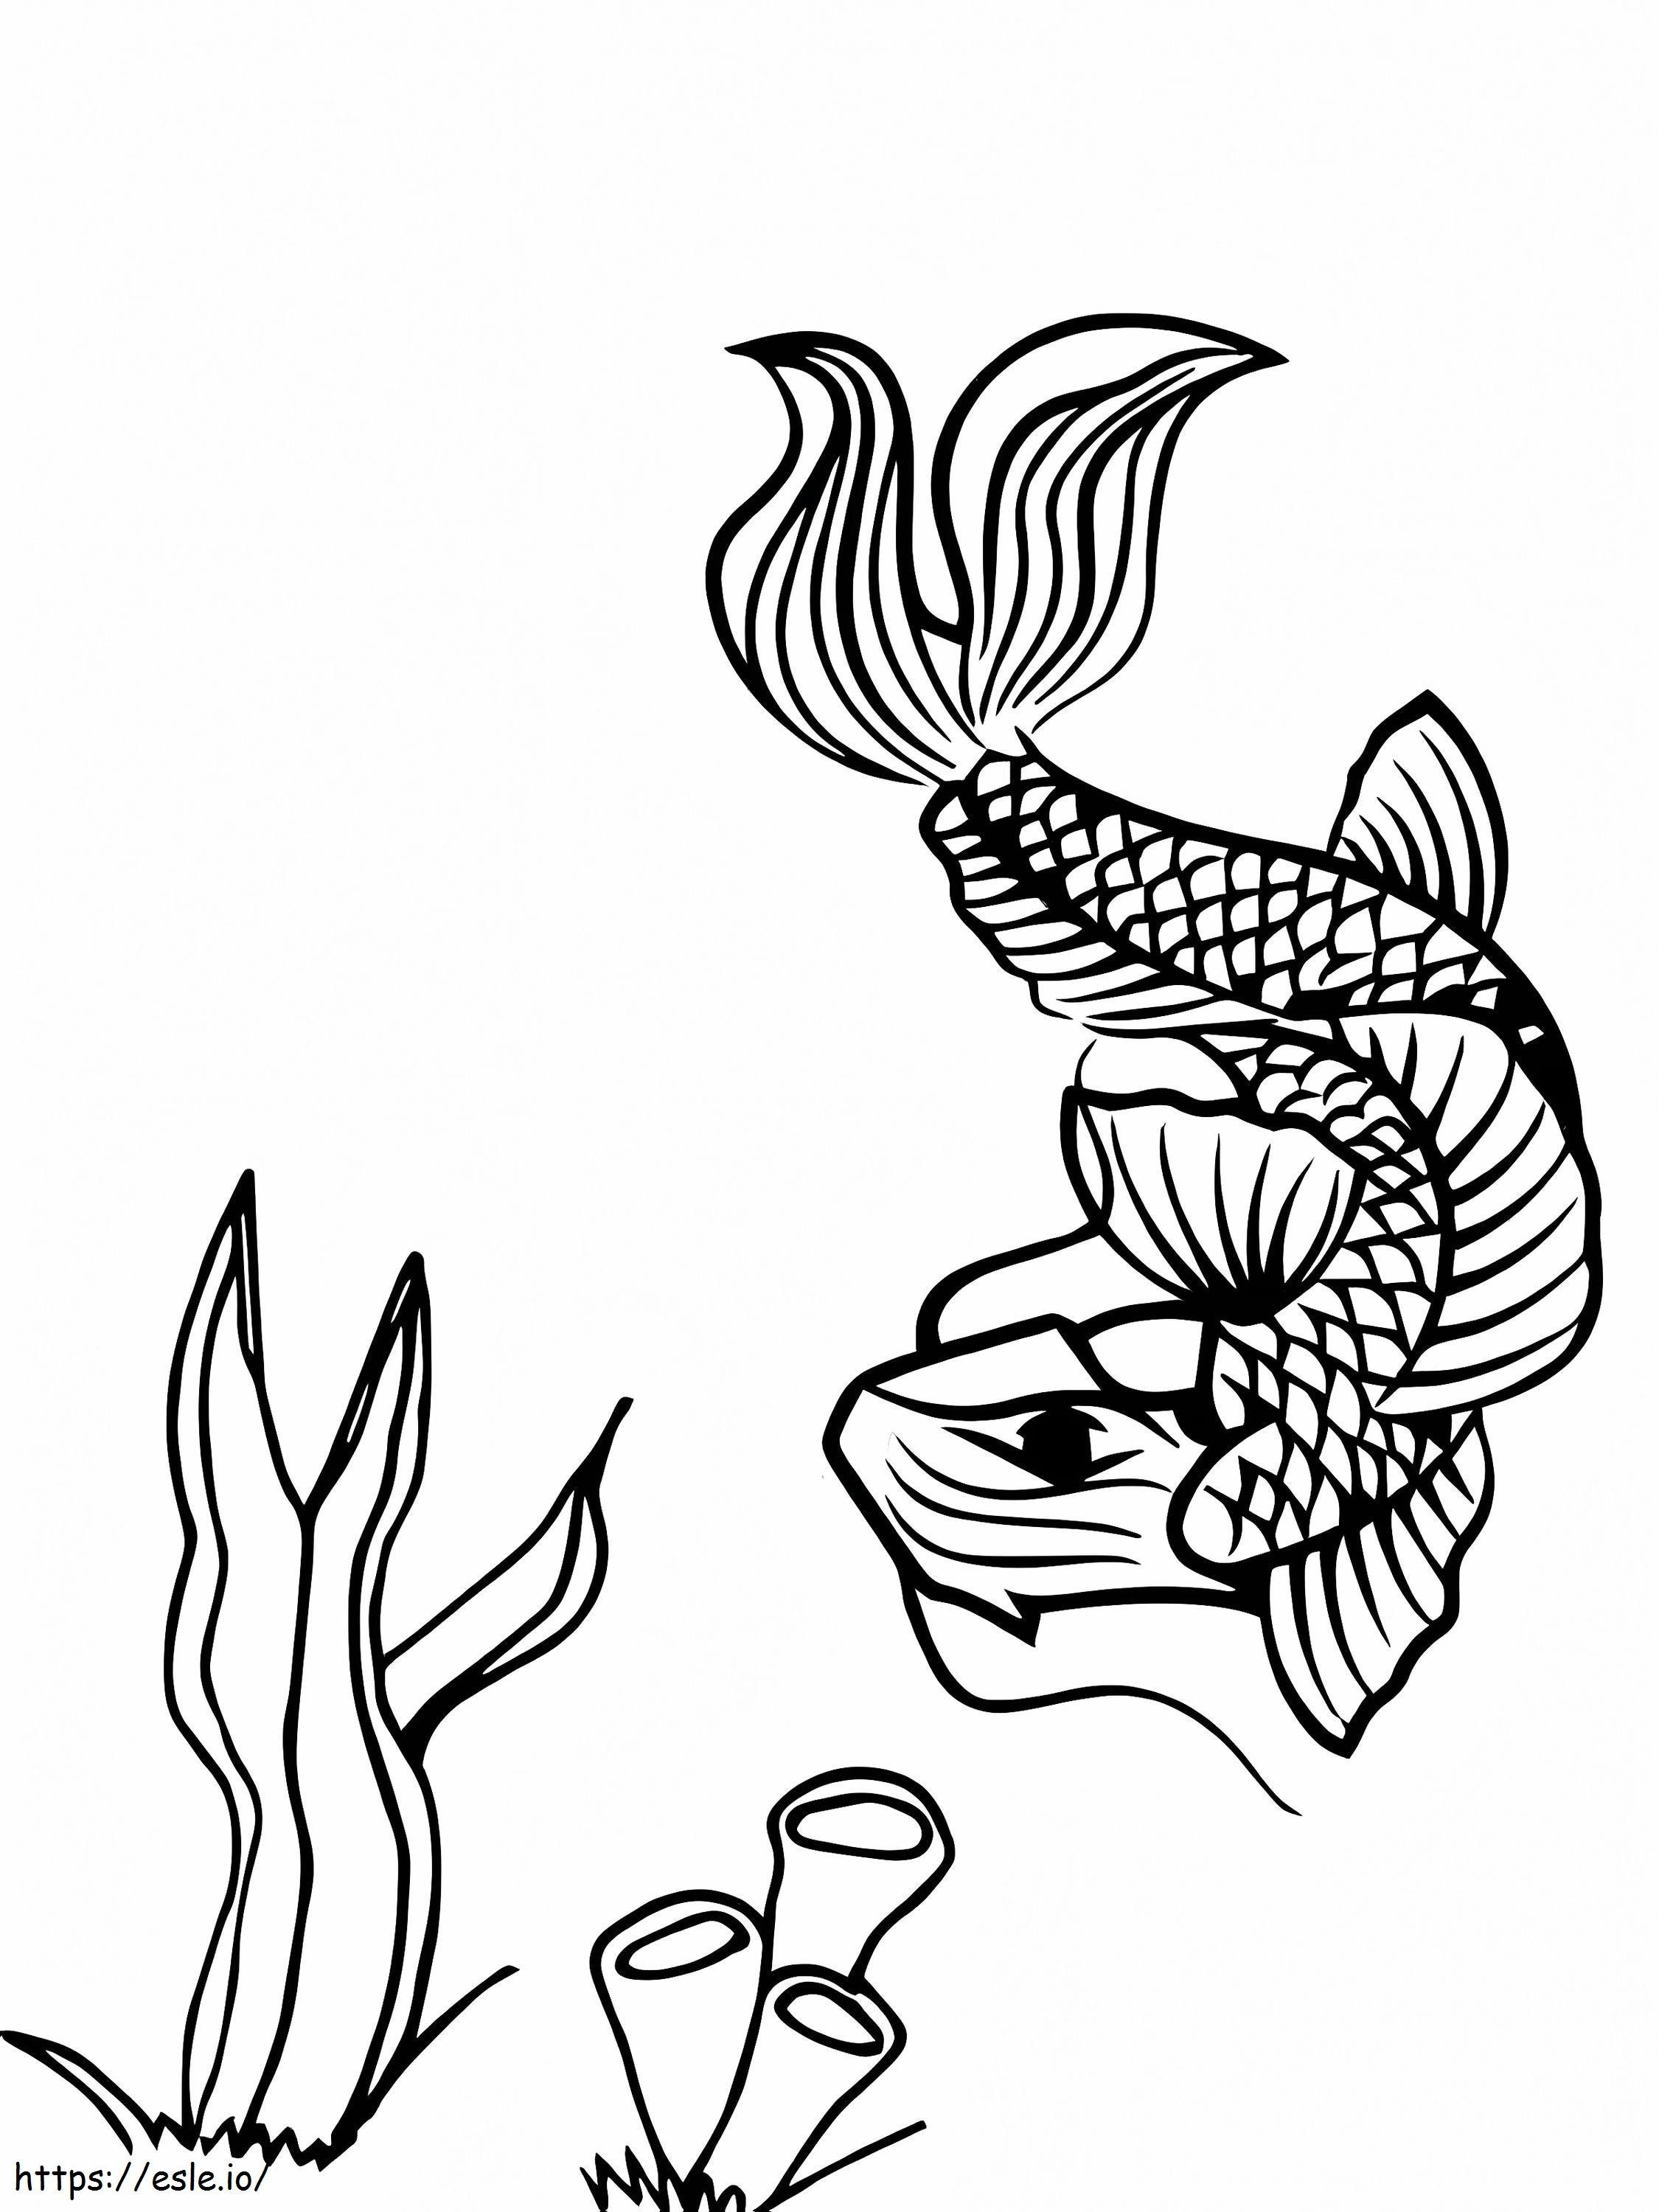 Velho Peixe Koi para colorir